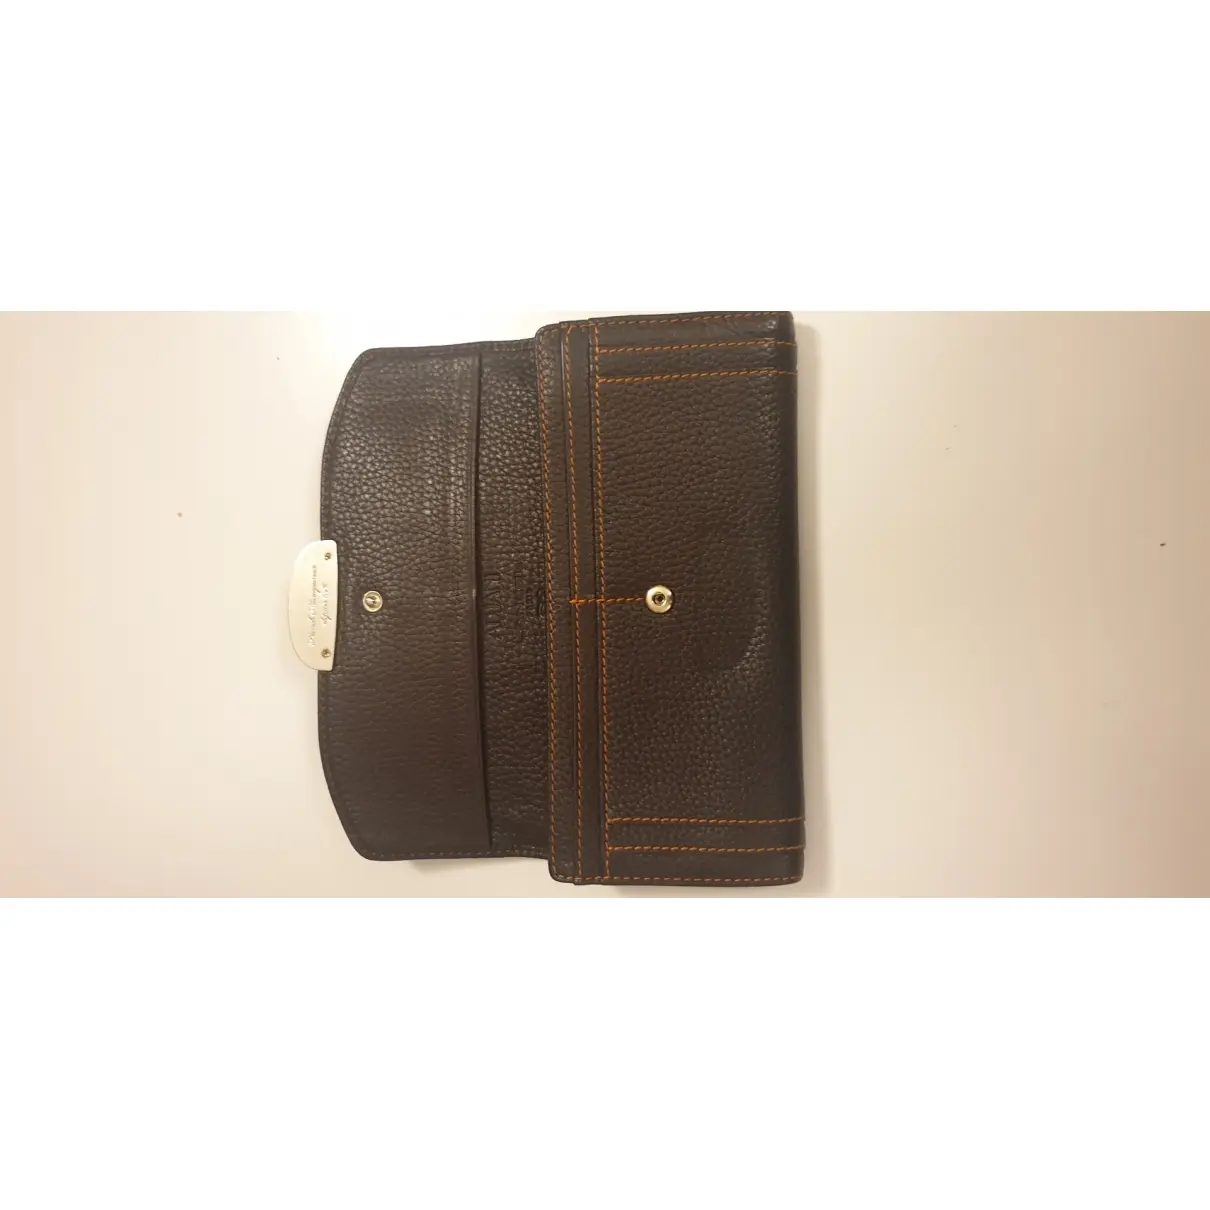 Adjani leather wallet Lancel